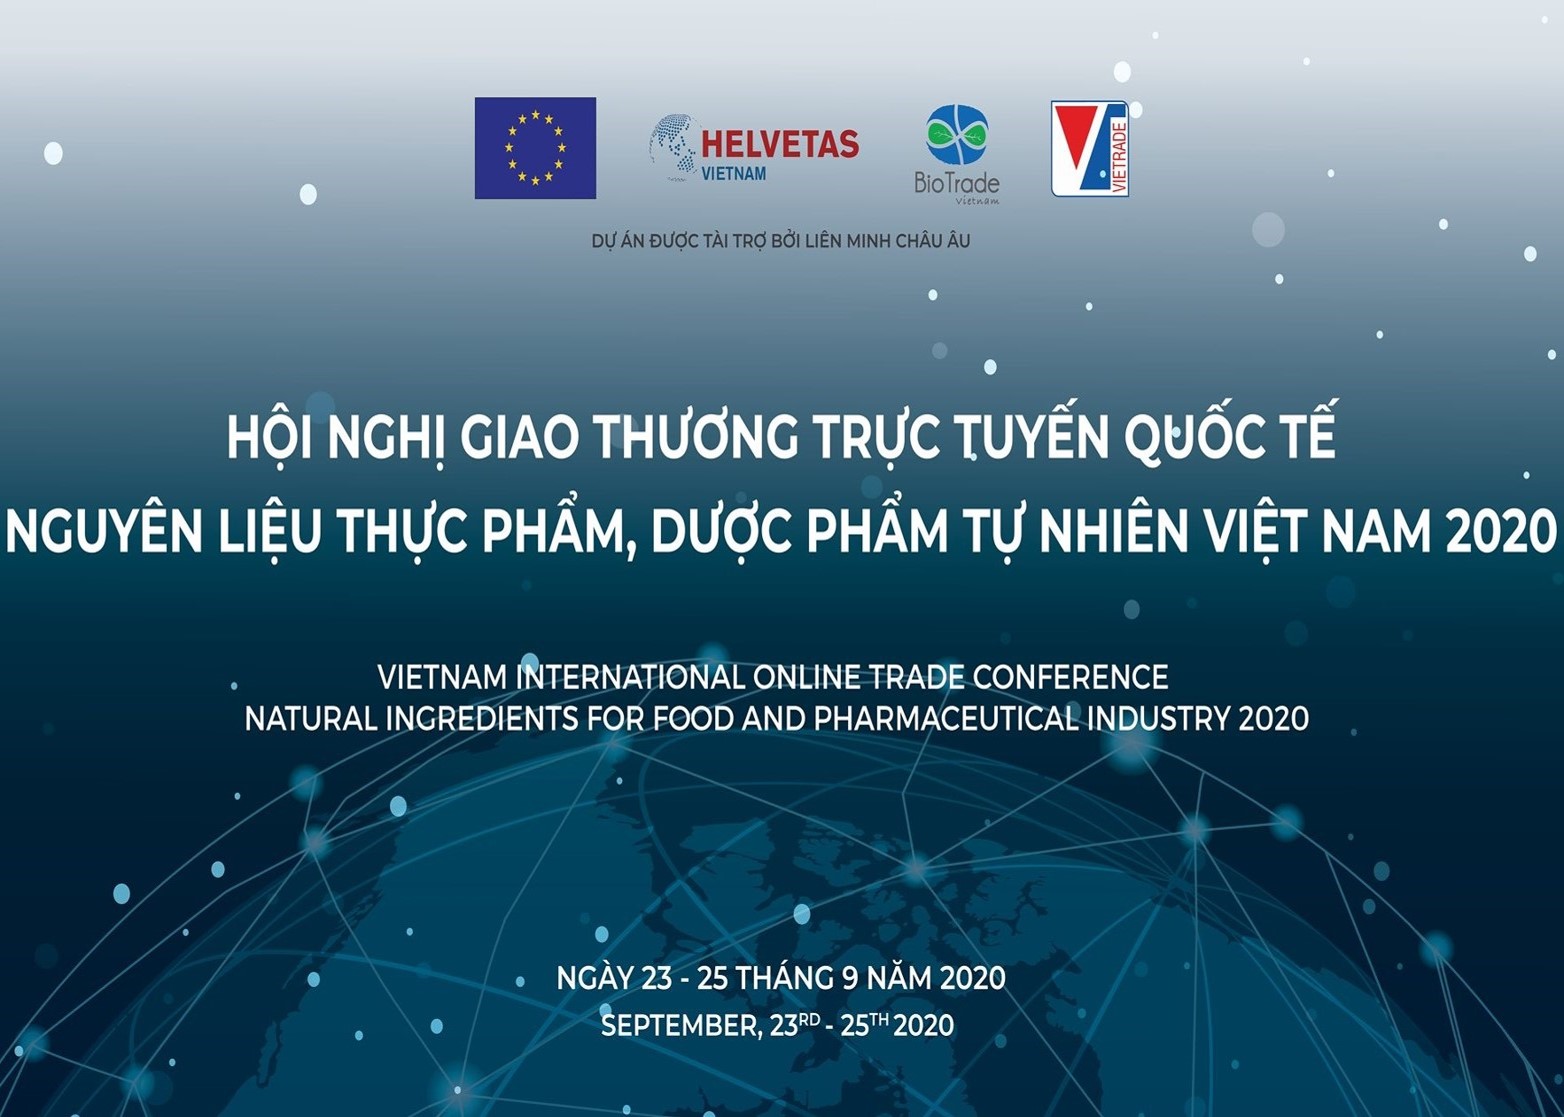 Visimex joins Vietnam International Business Networking webinar on natural ingredients for food & pharmaceutical industry 2020